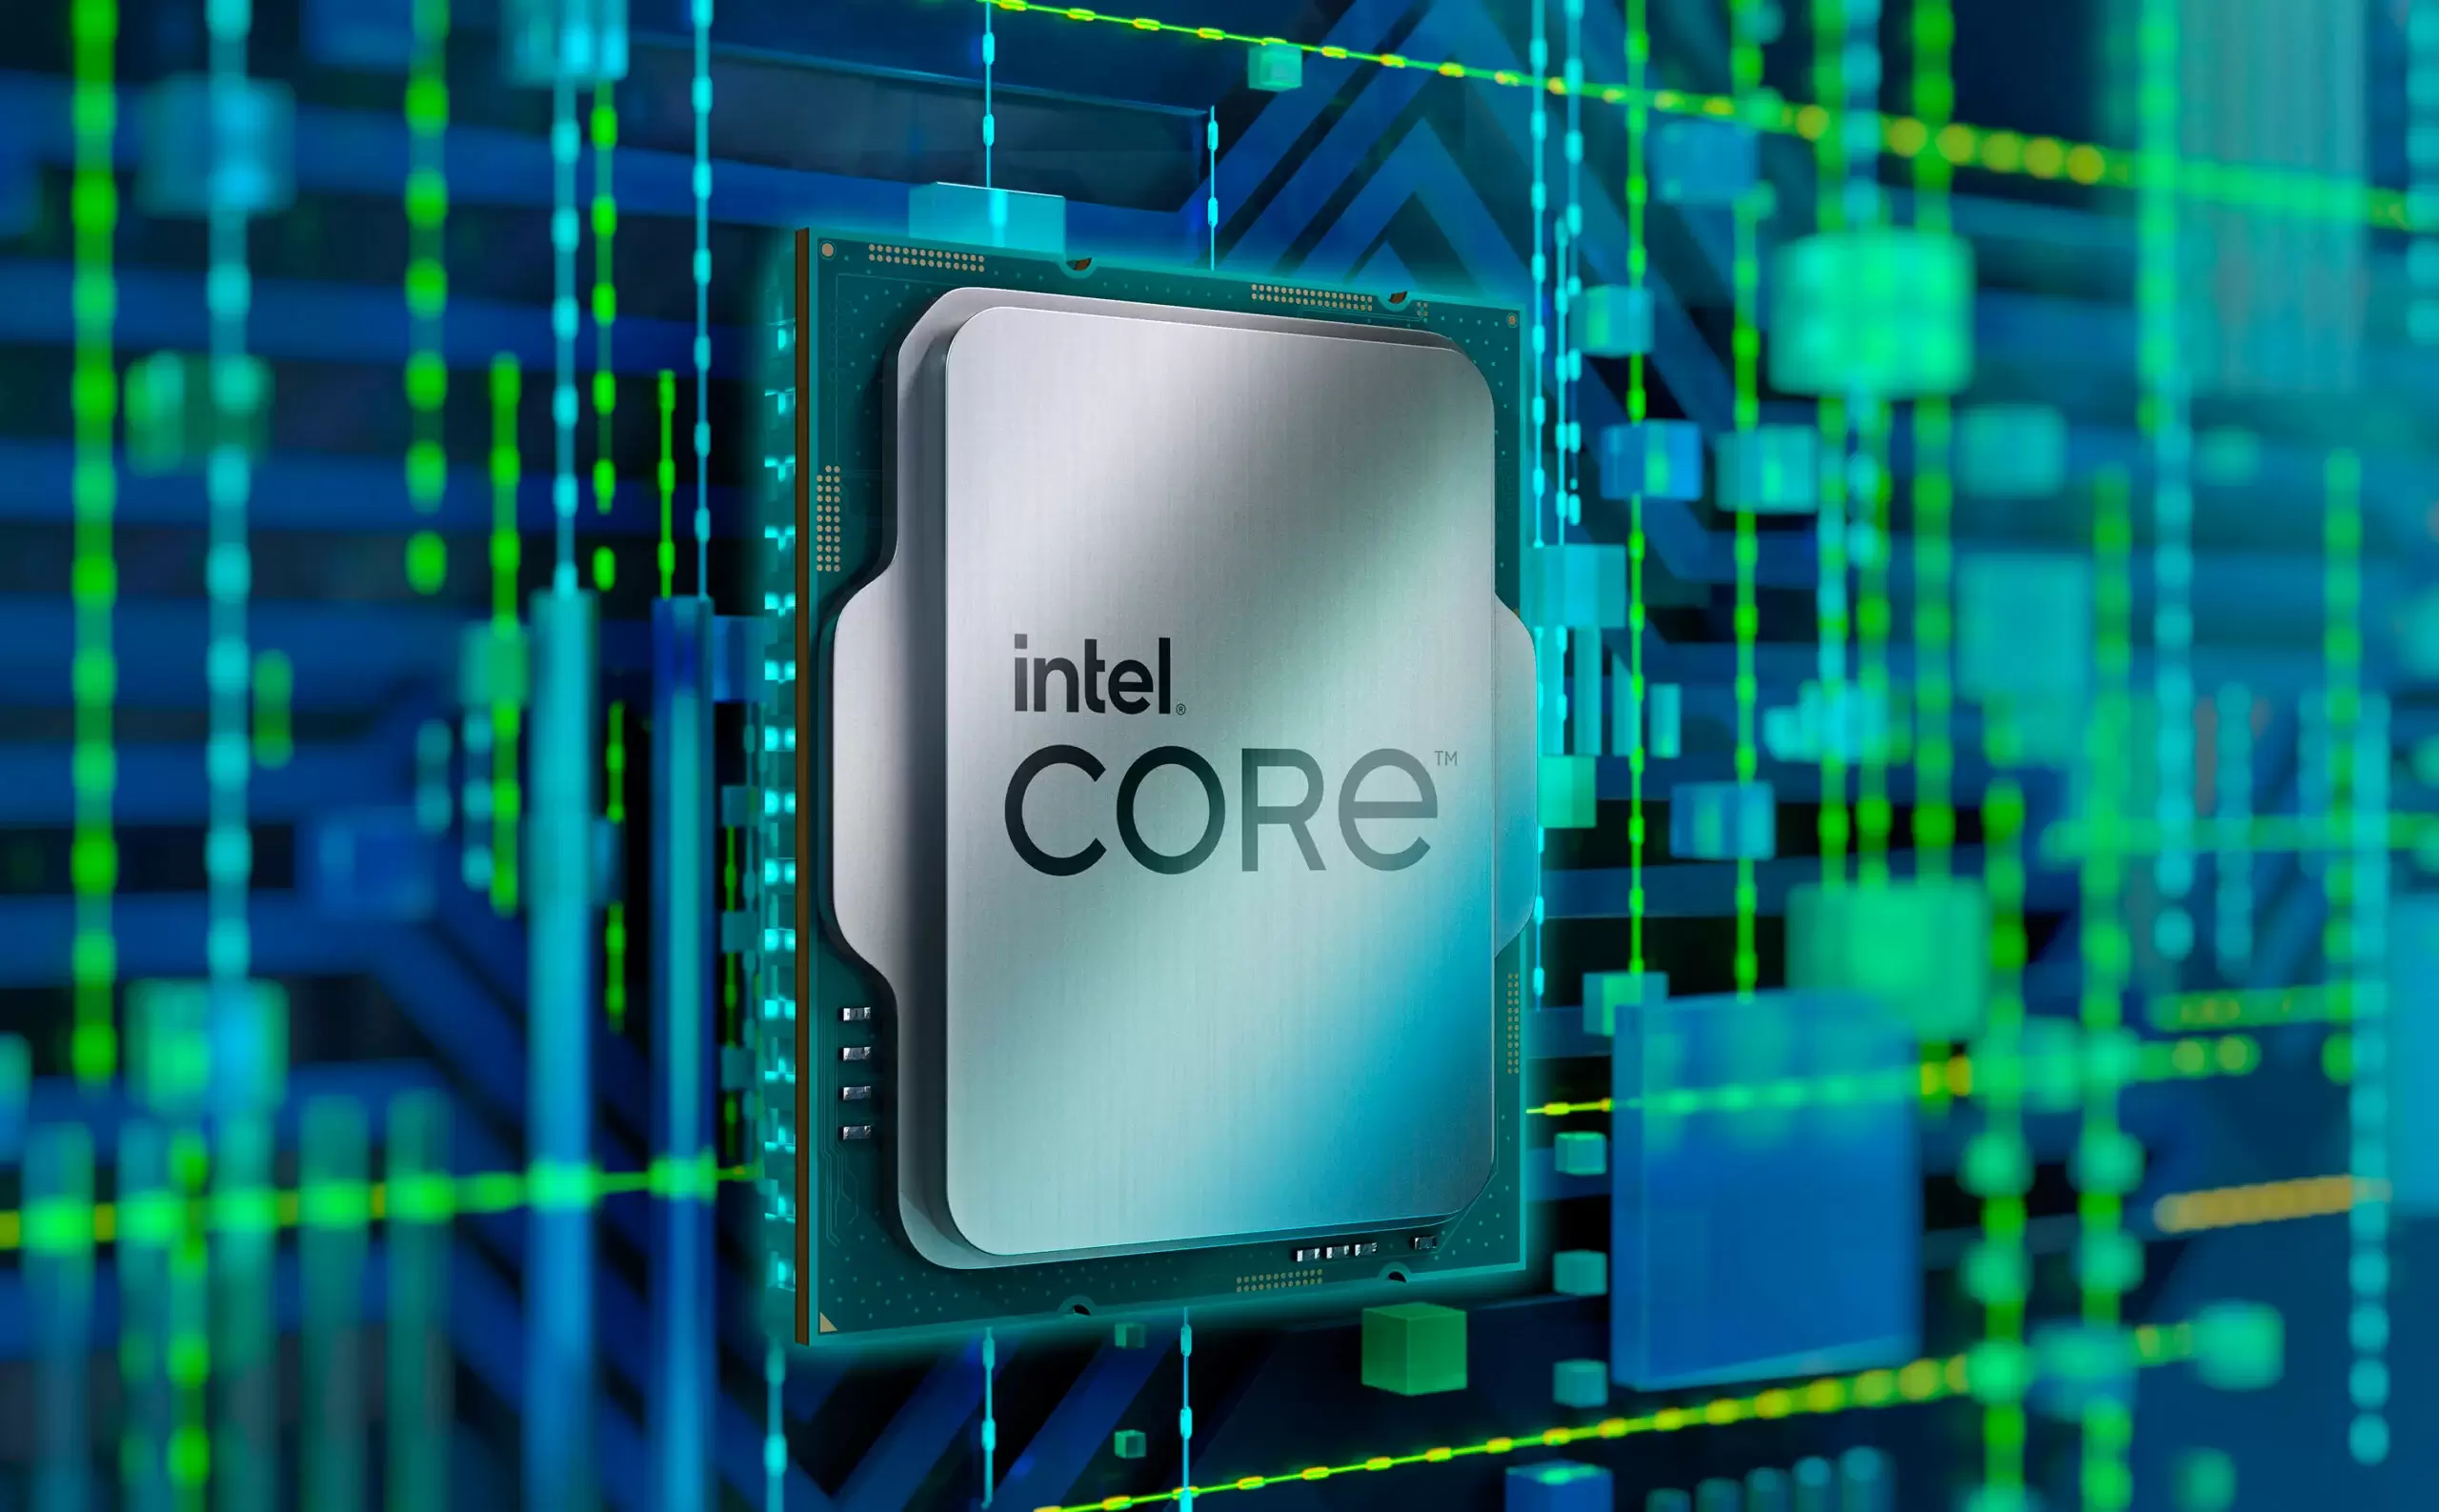   Intel Core i5  Raptor Lake   50%   